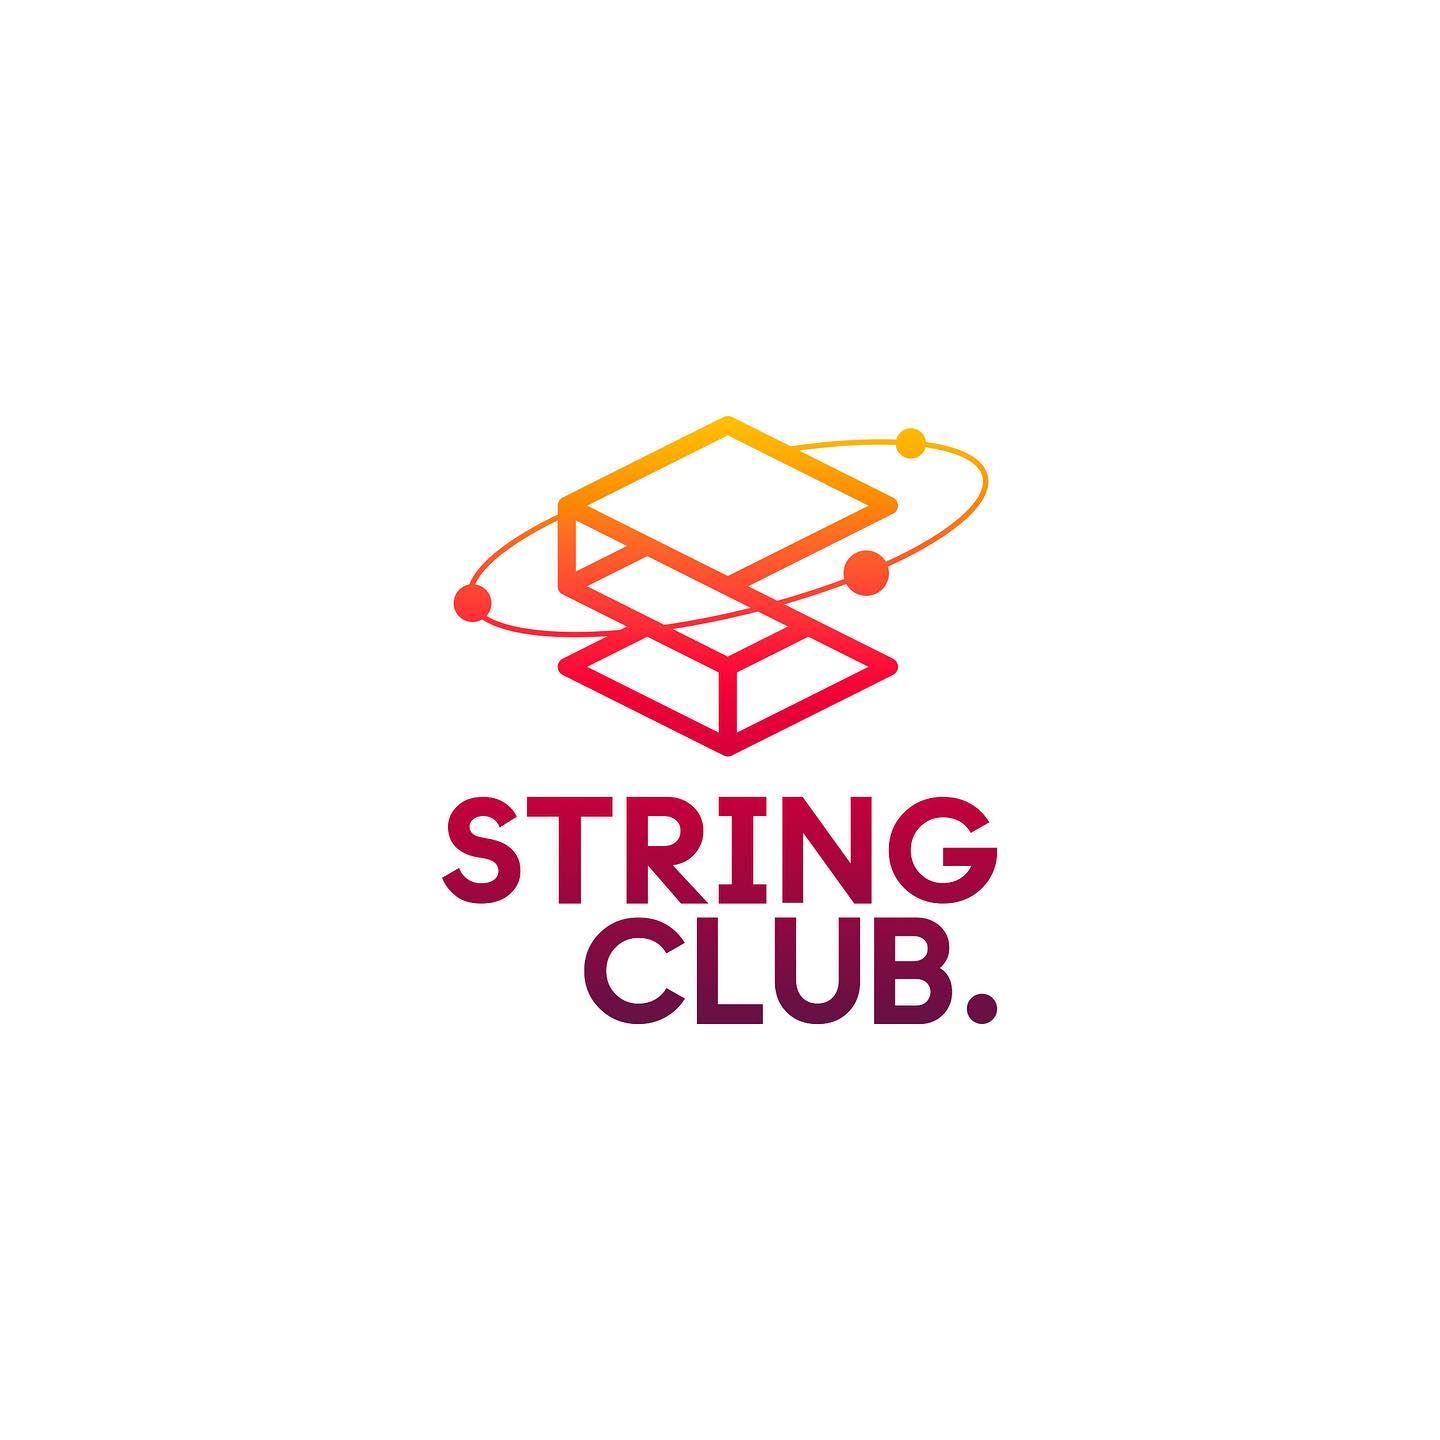 Identidad corporativa String Club